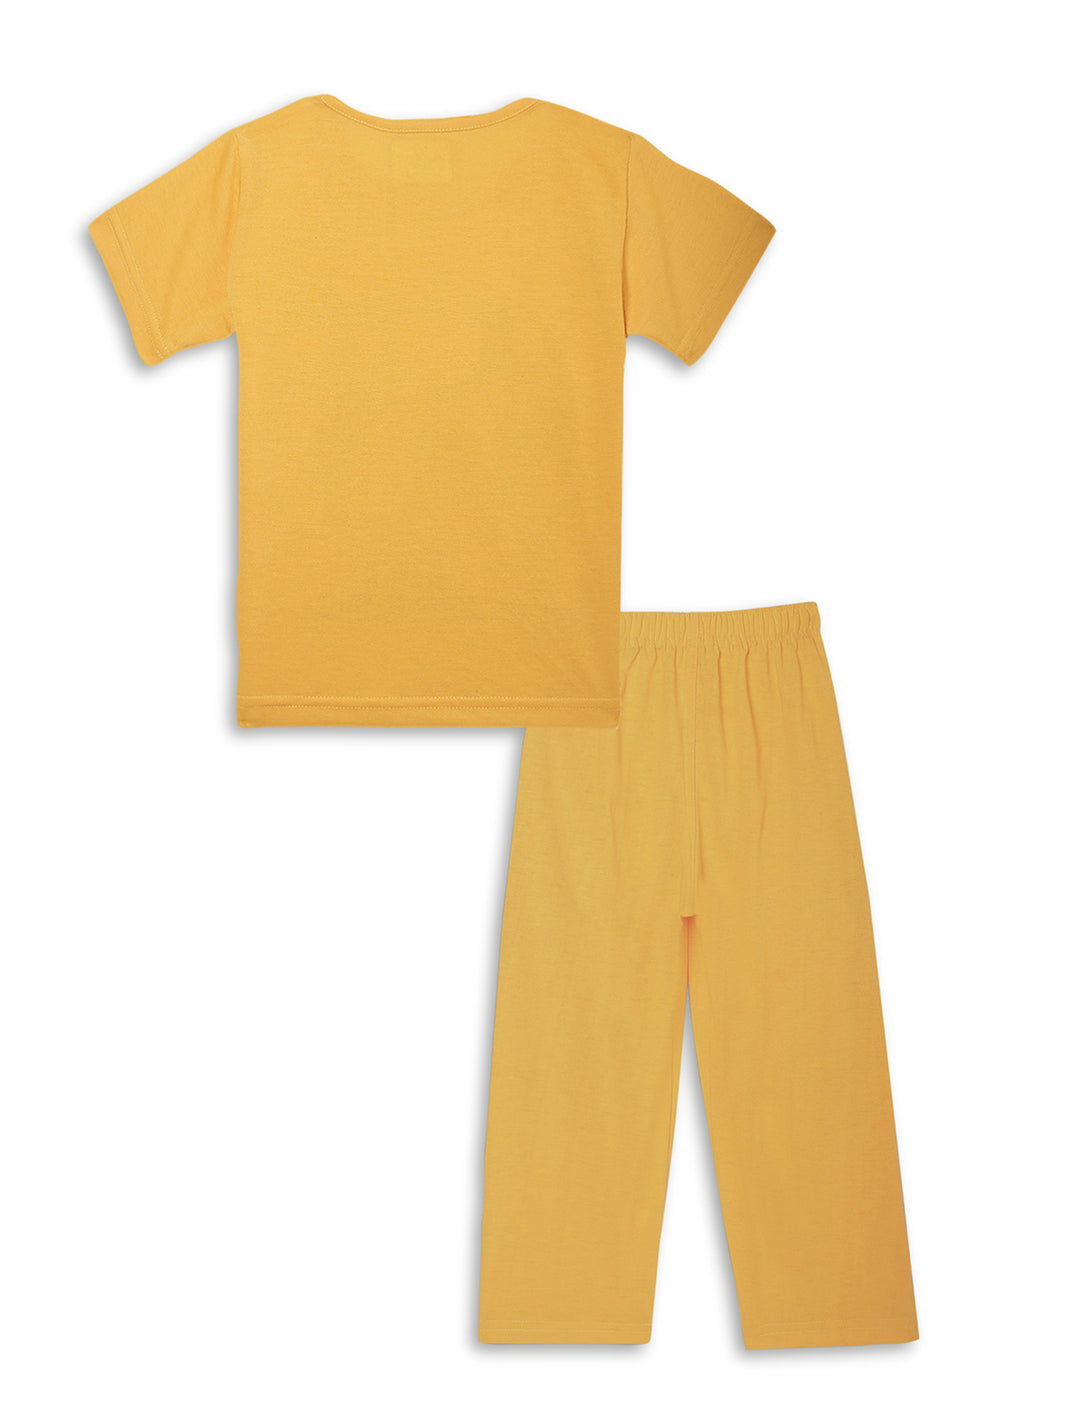 Vimal Jonney Printed Yellow Regular Fit Cotton blended Tshirt And Bottom Set For Kids